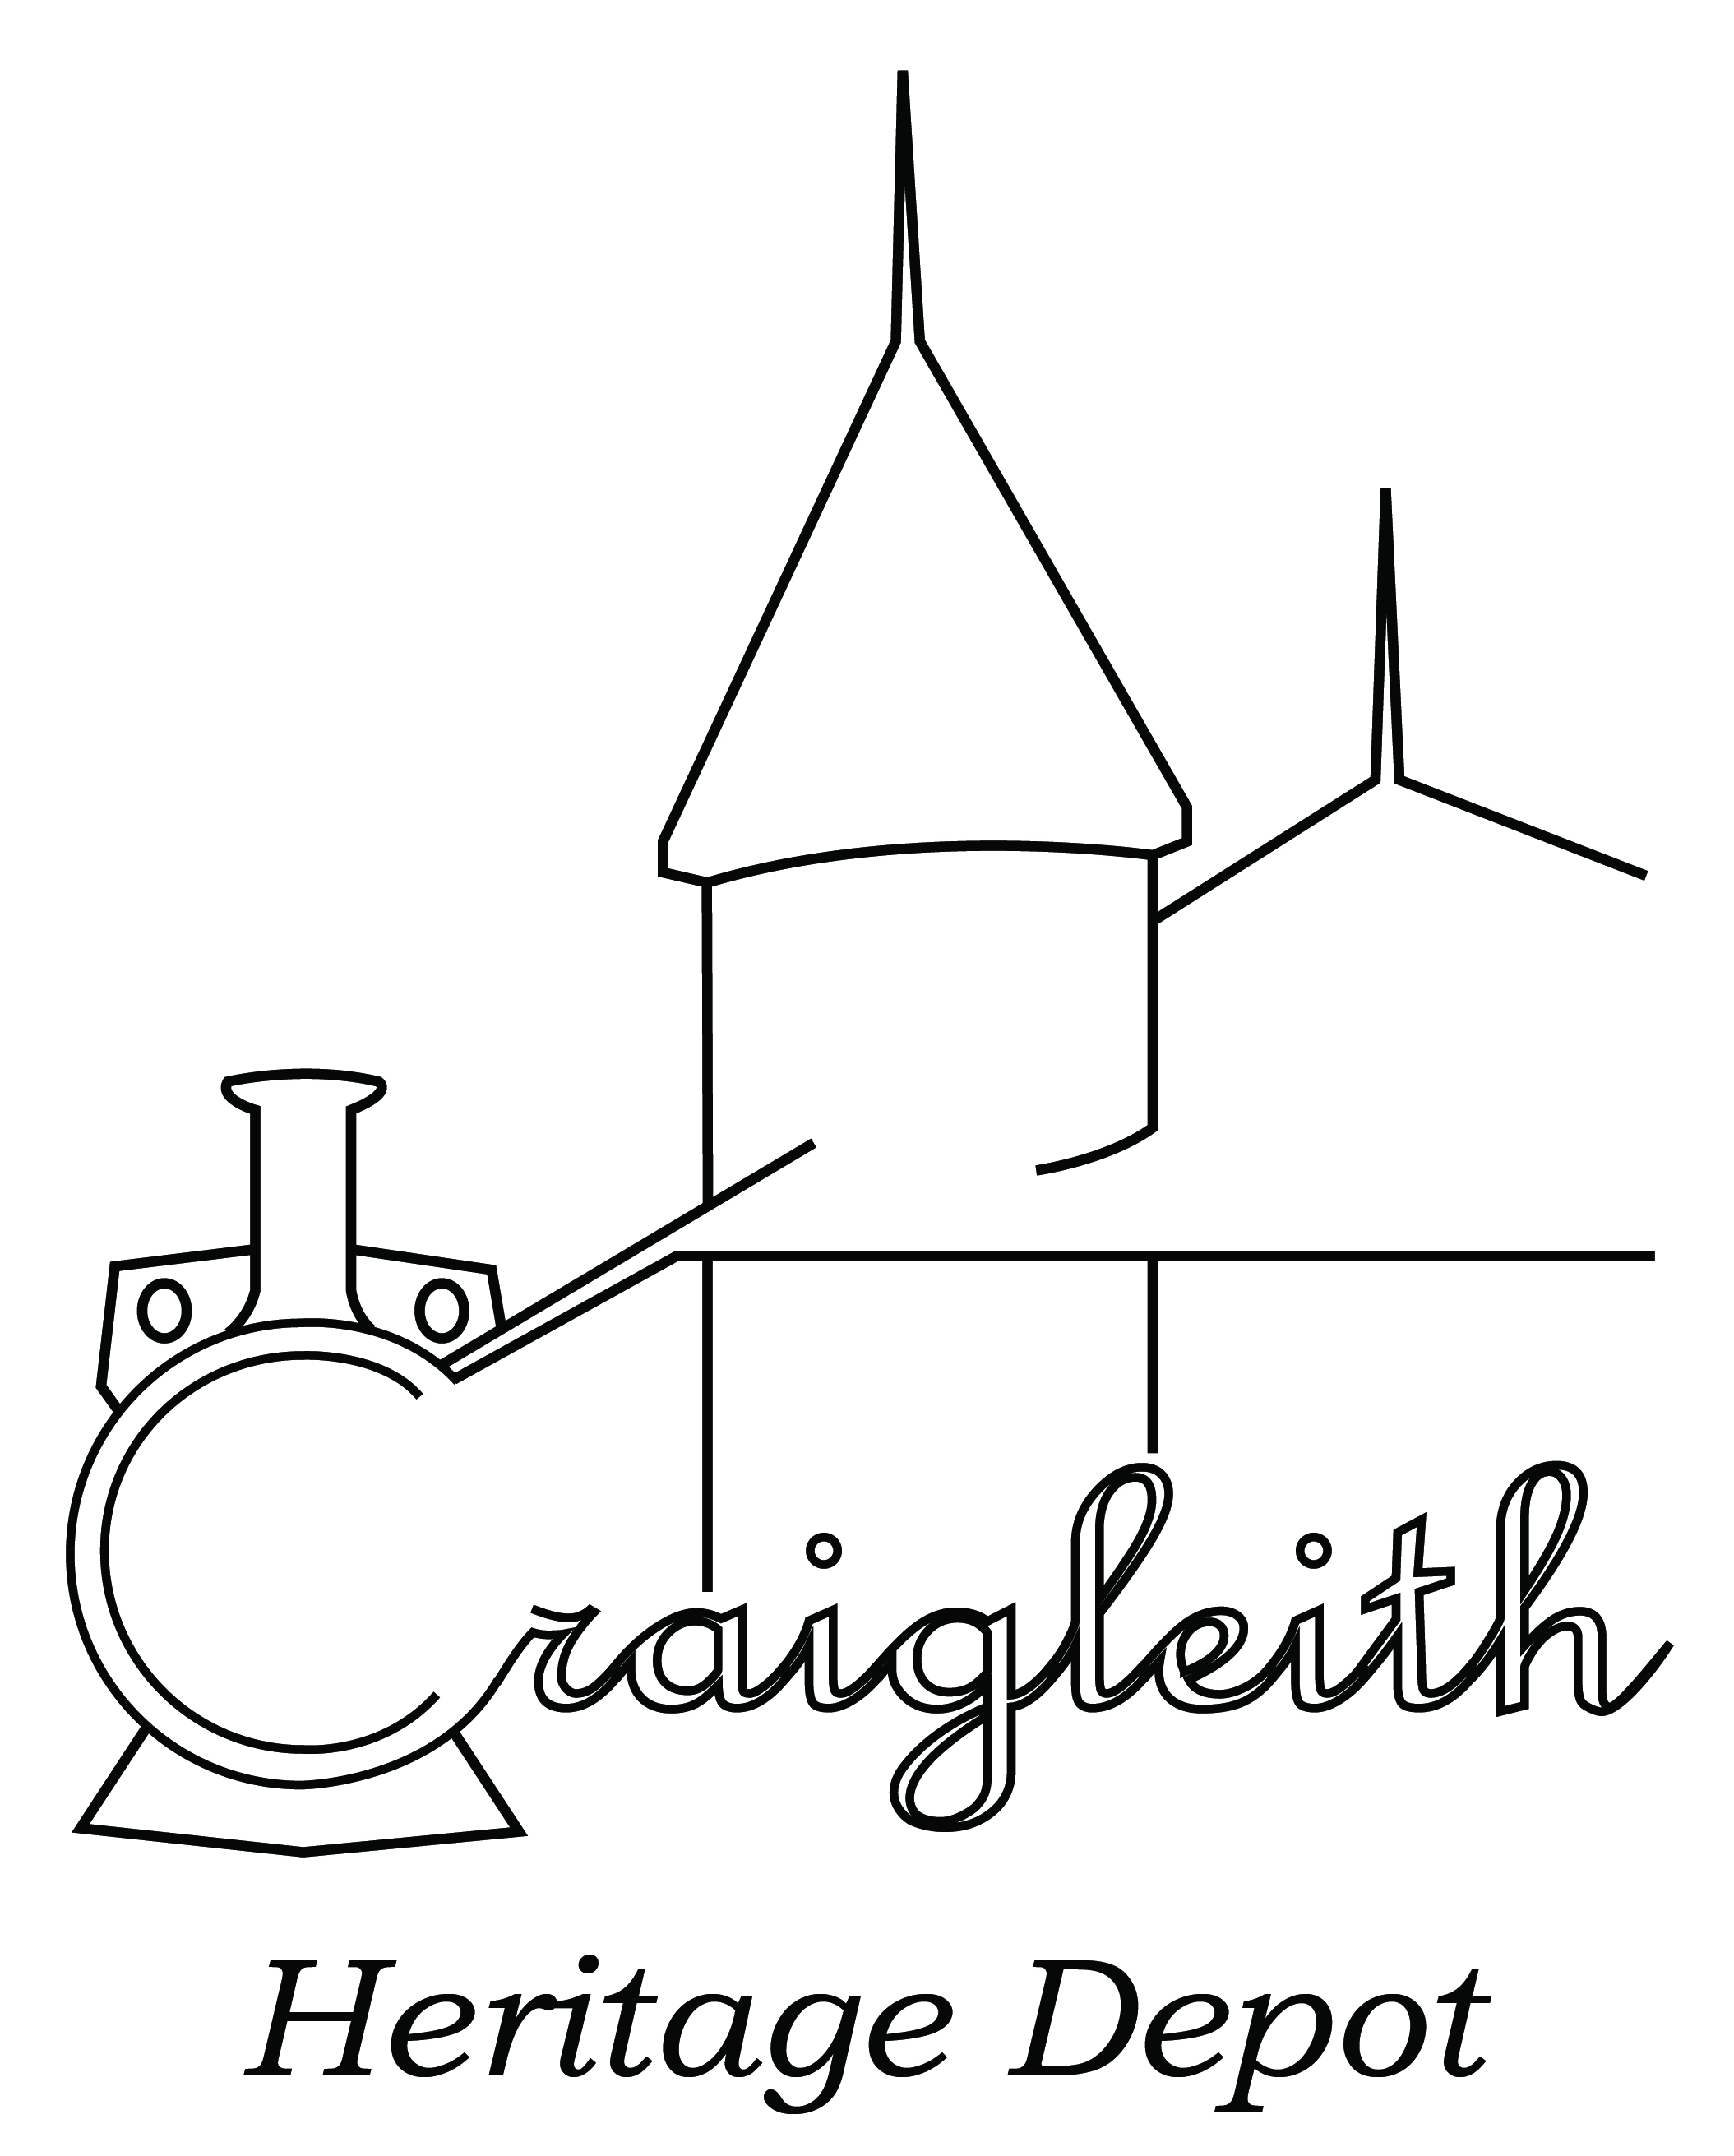 Blue Mountains Public Library - Craigleith Heritage Depot Logo